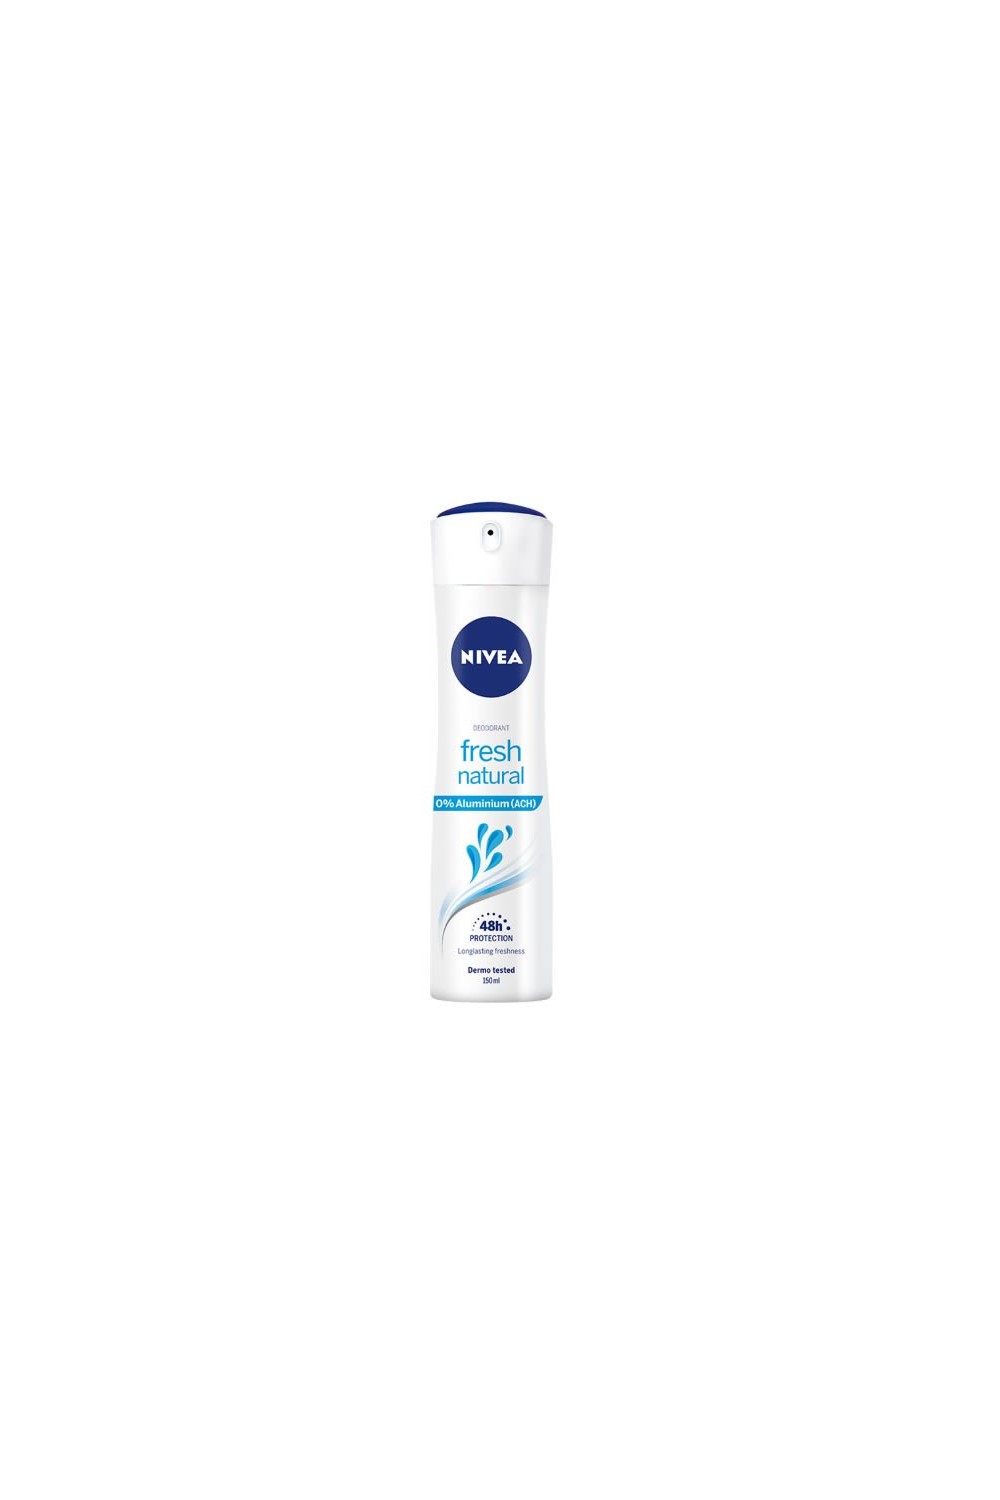 Nivea Fresh Natural 0% Aluminuim Deodorant Spray 150ml